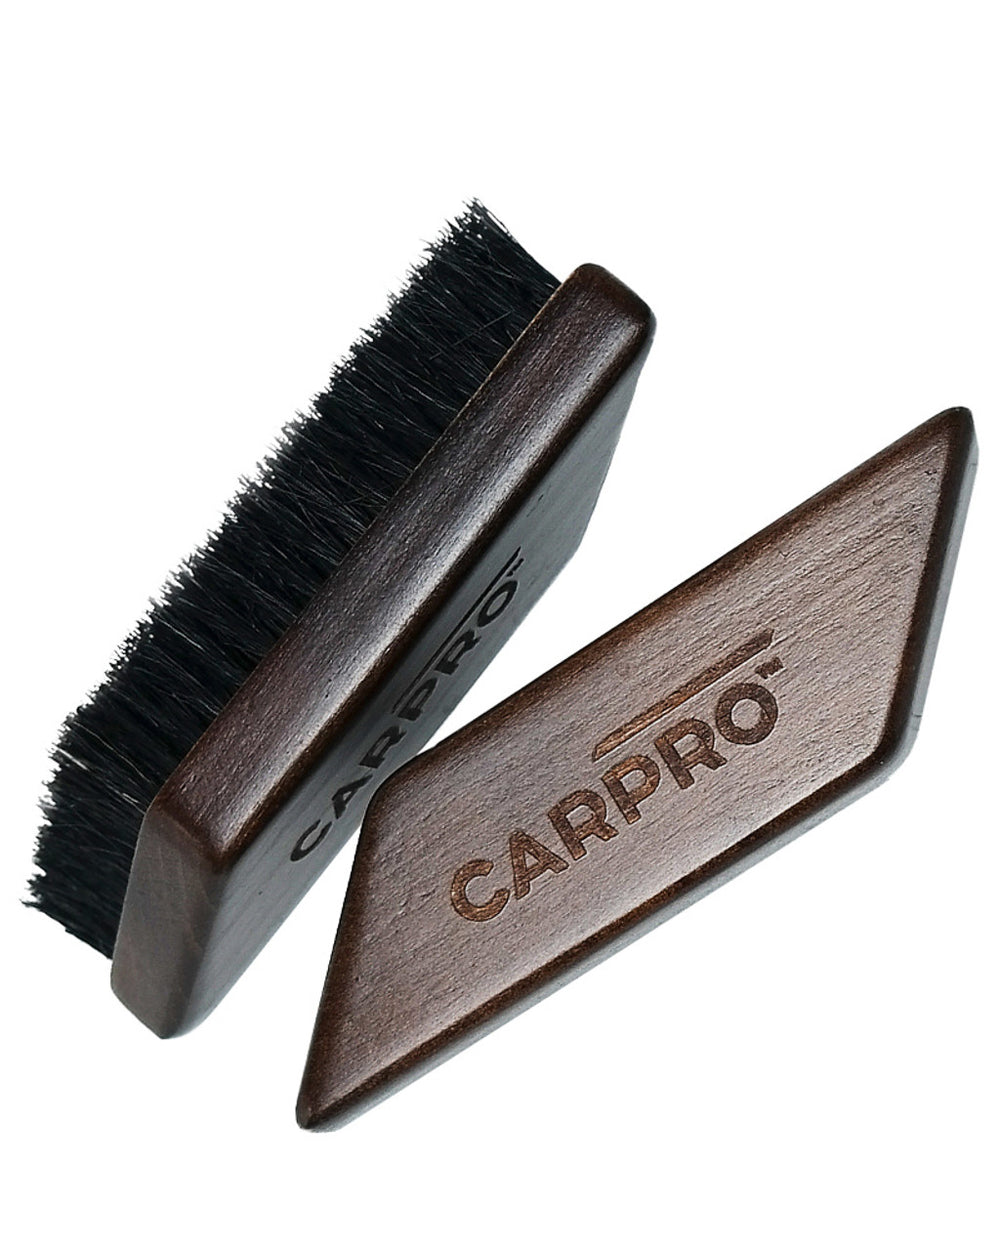 CARPRO - Small Leather Brush (Brosse pour les cuirs)